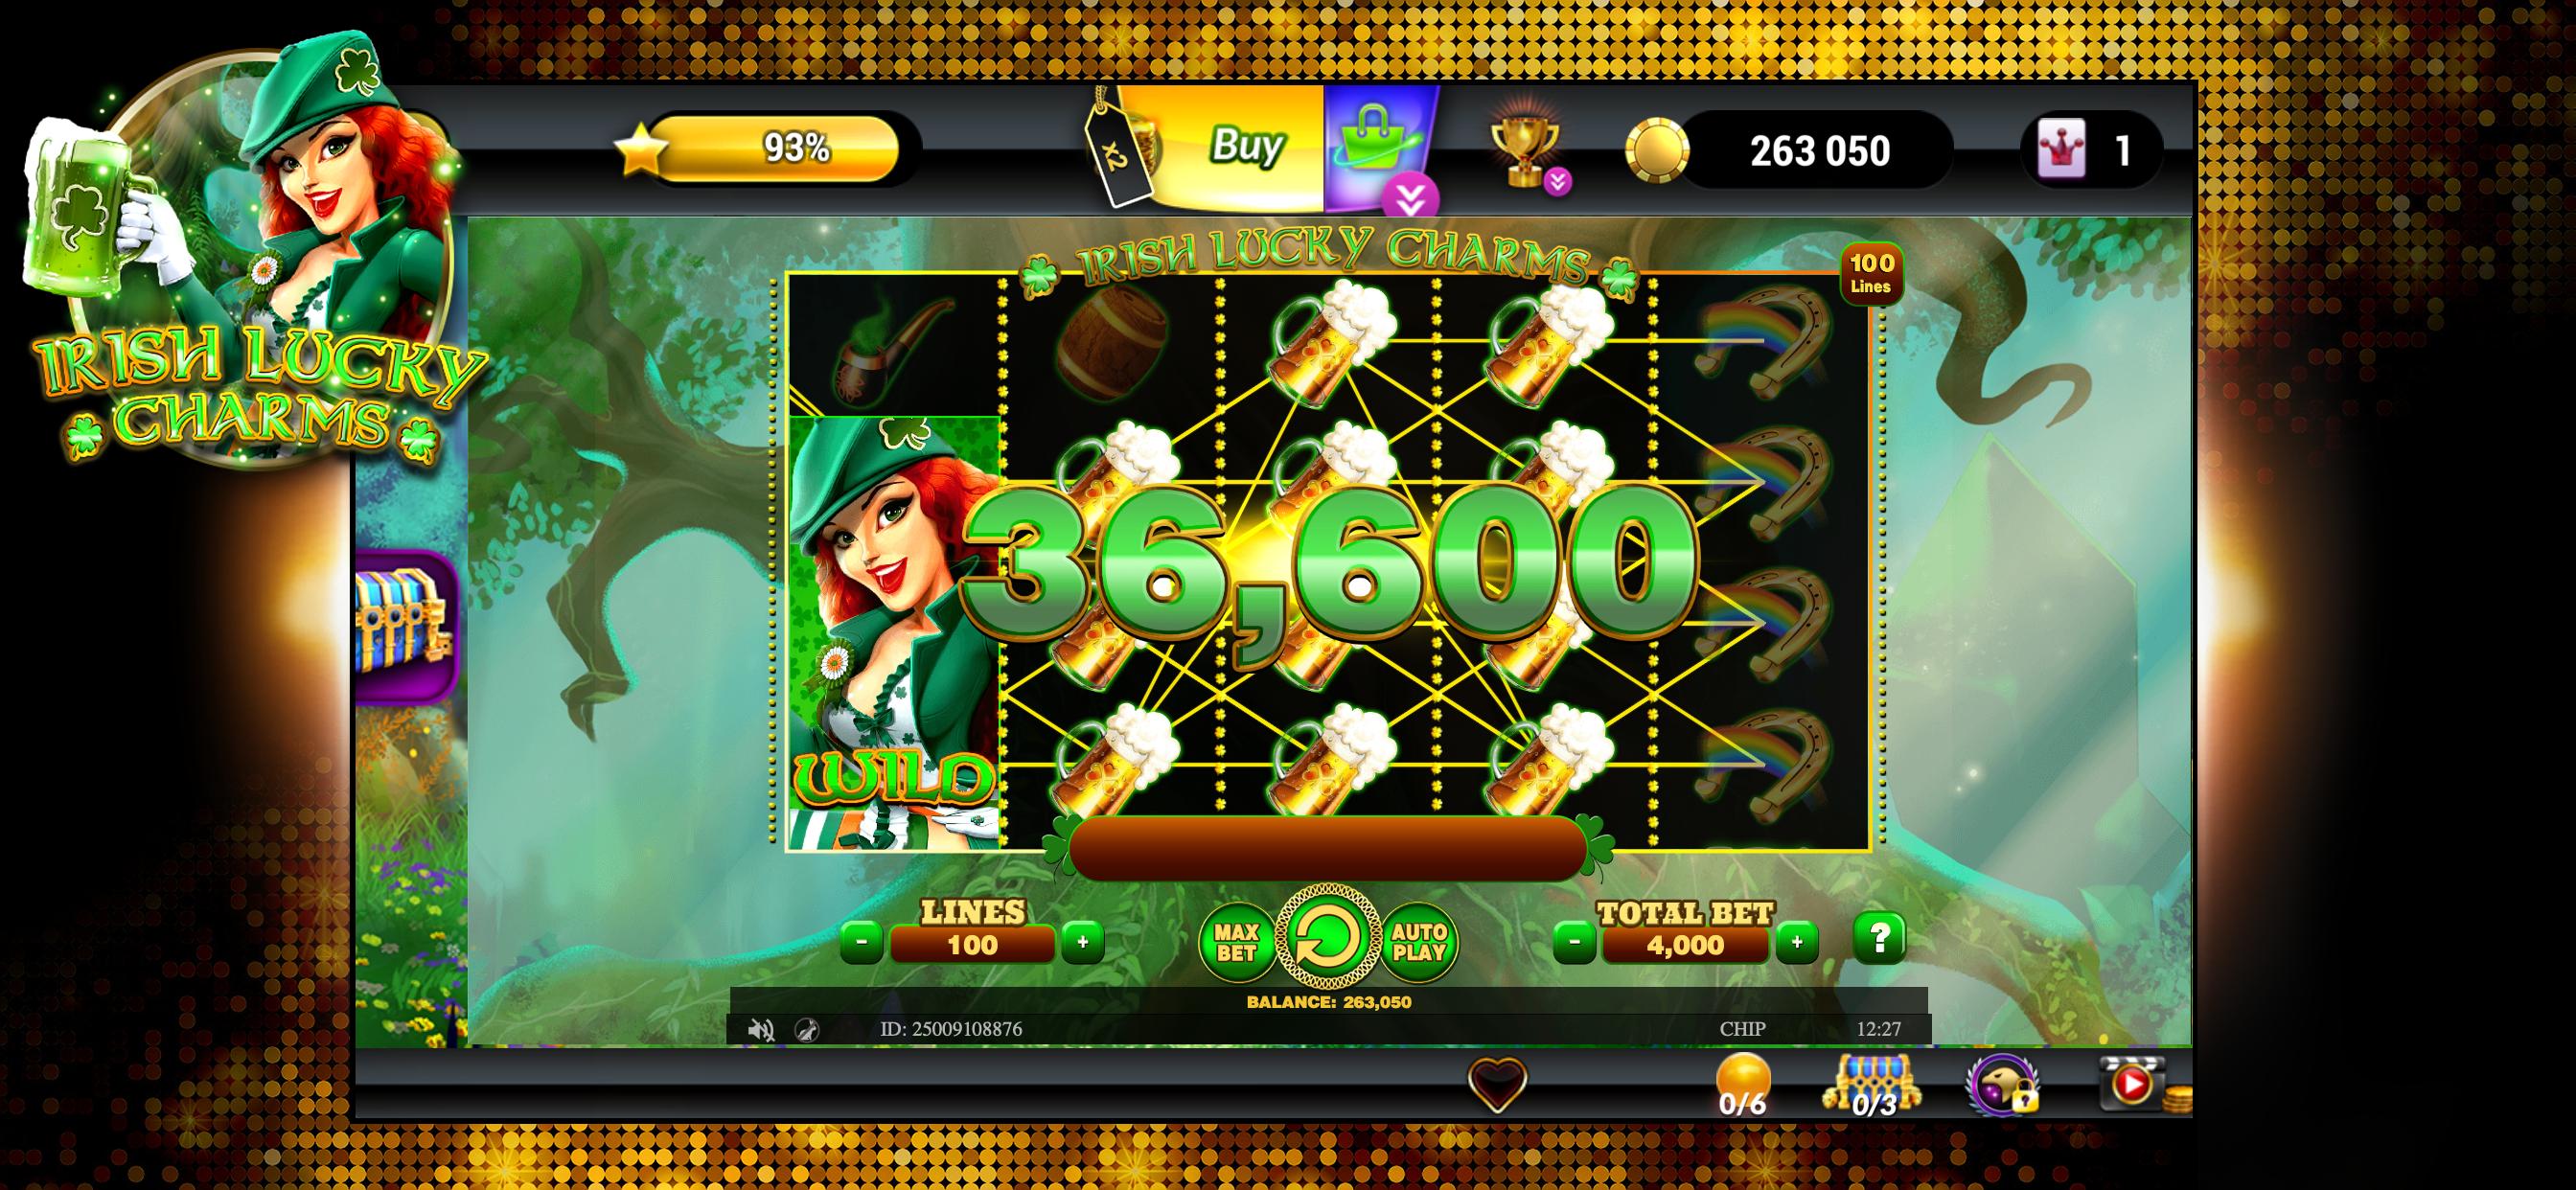 Lounge777 Online Casino 4.11.46 Screenshot 4